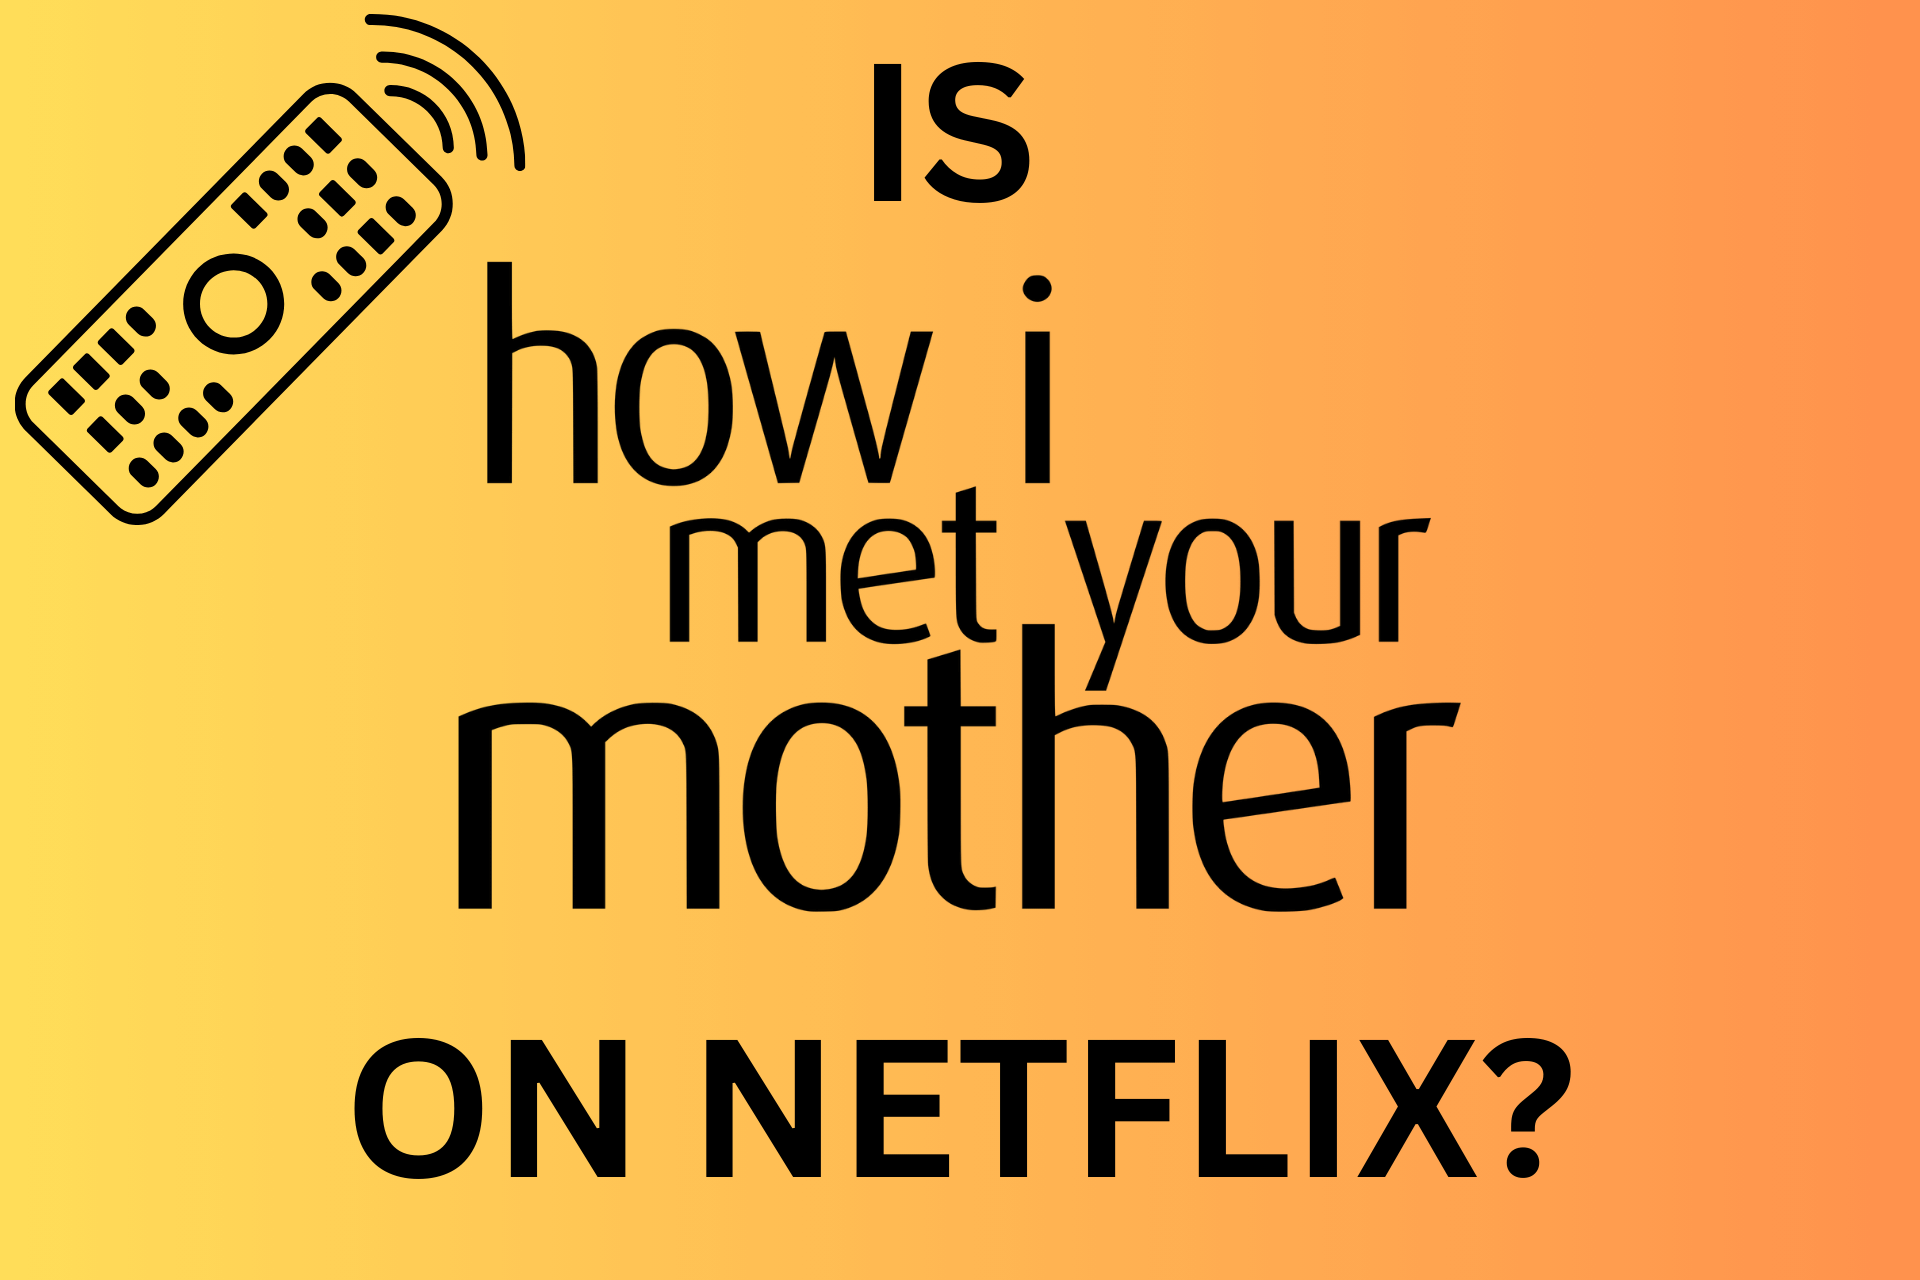 Is How I met your mother on Netflix